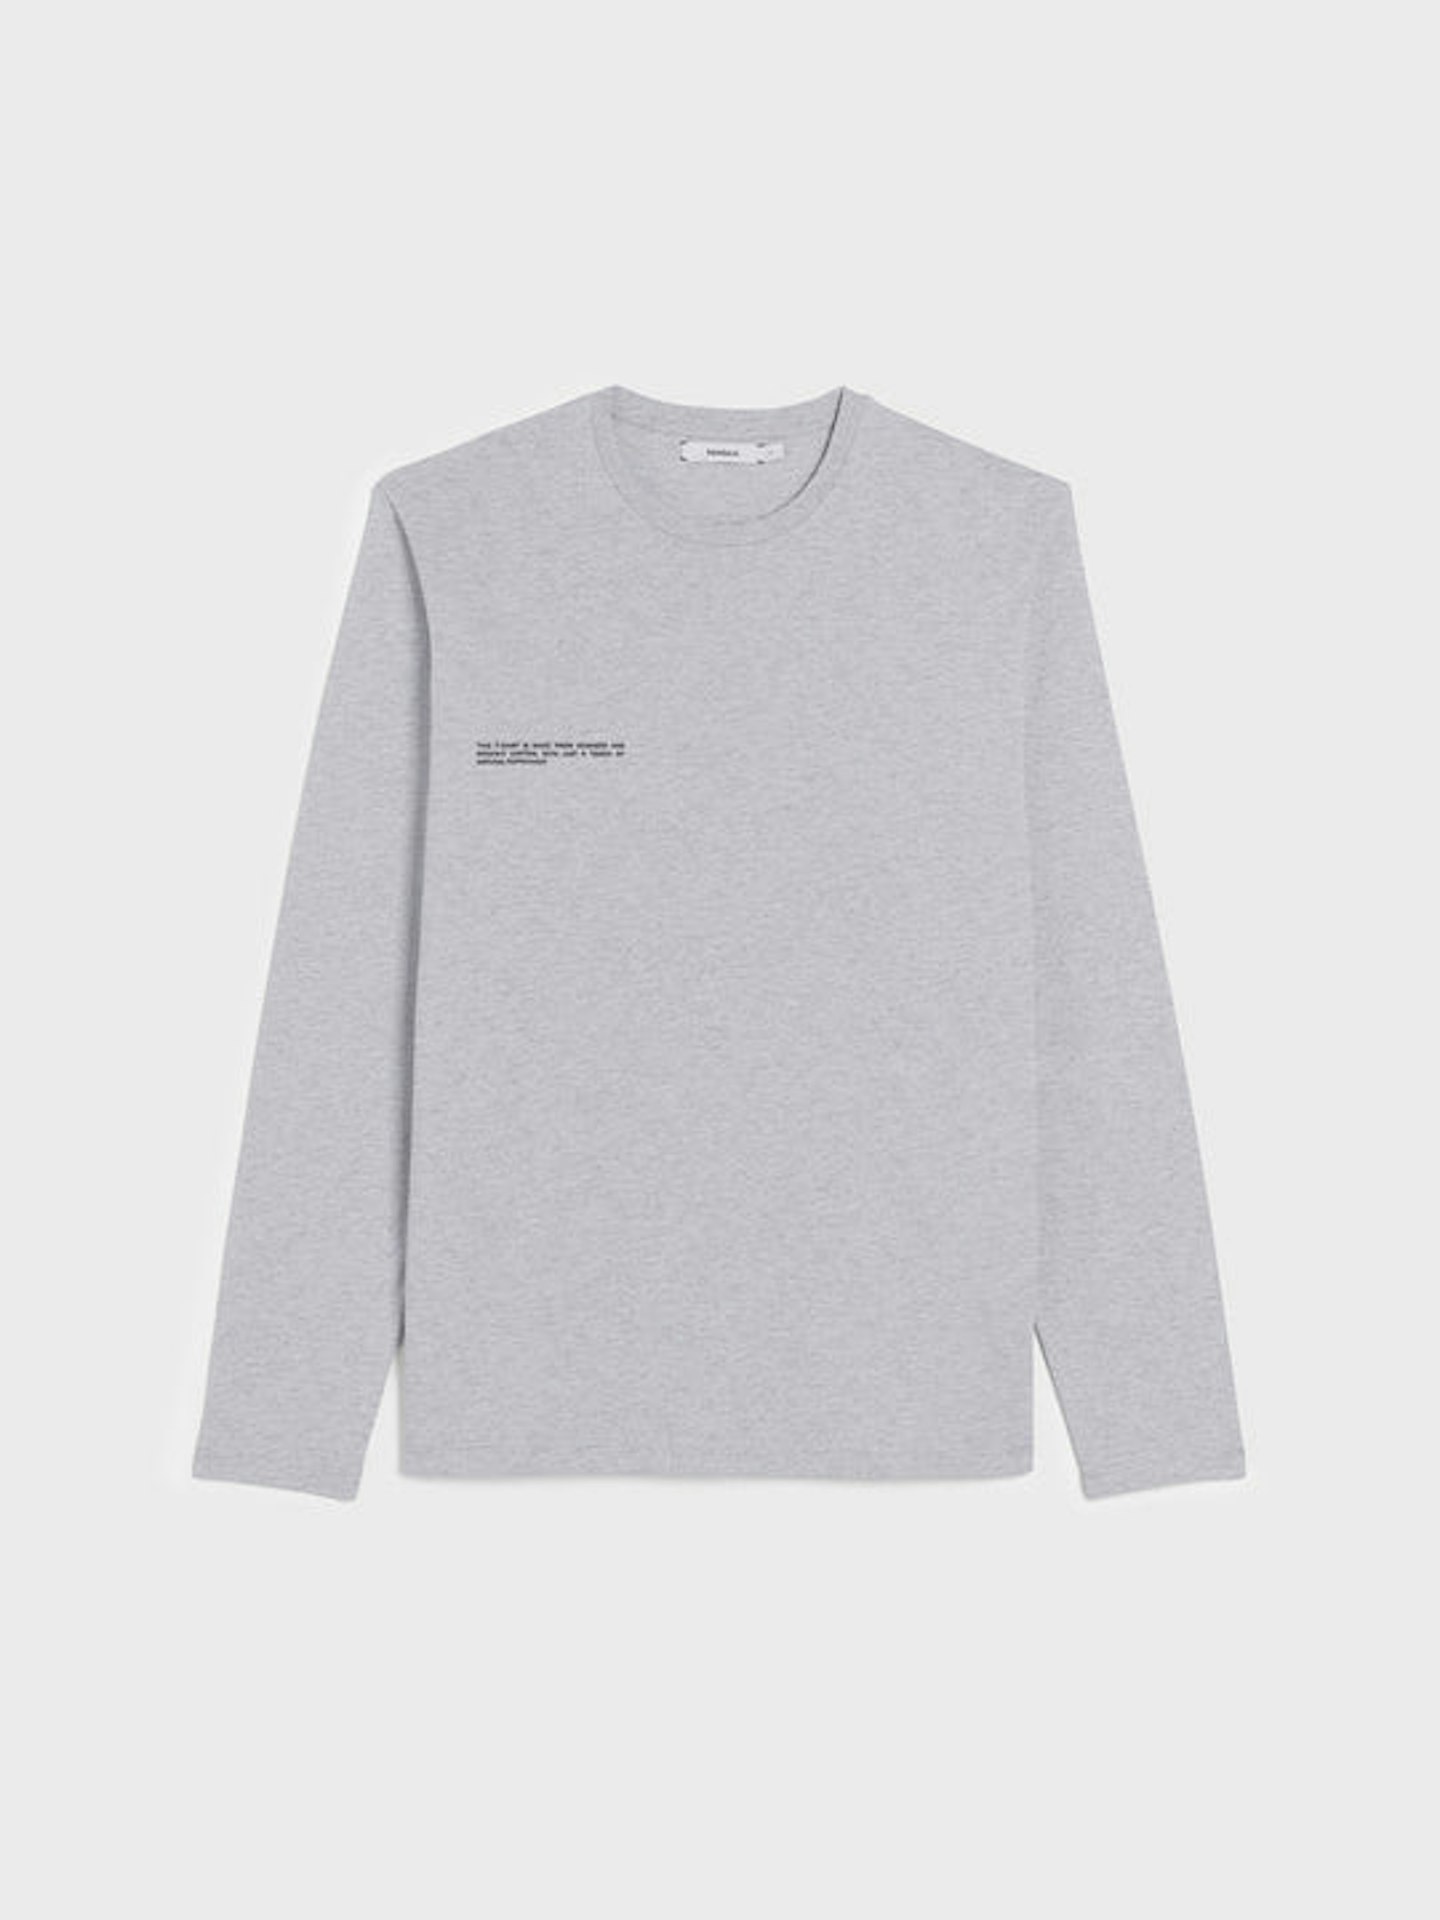 Pangaia, Organic Cotton Long Sleeve Shirt, £70